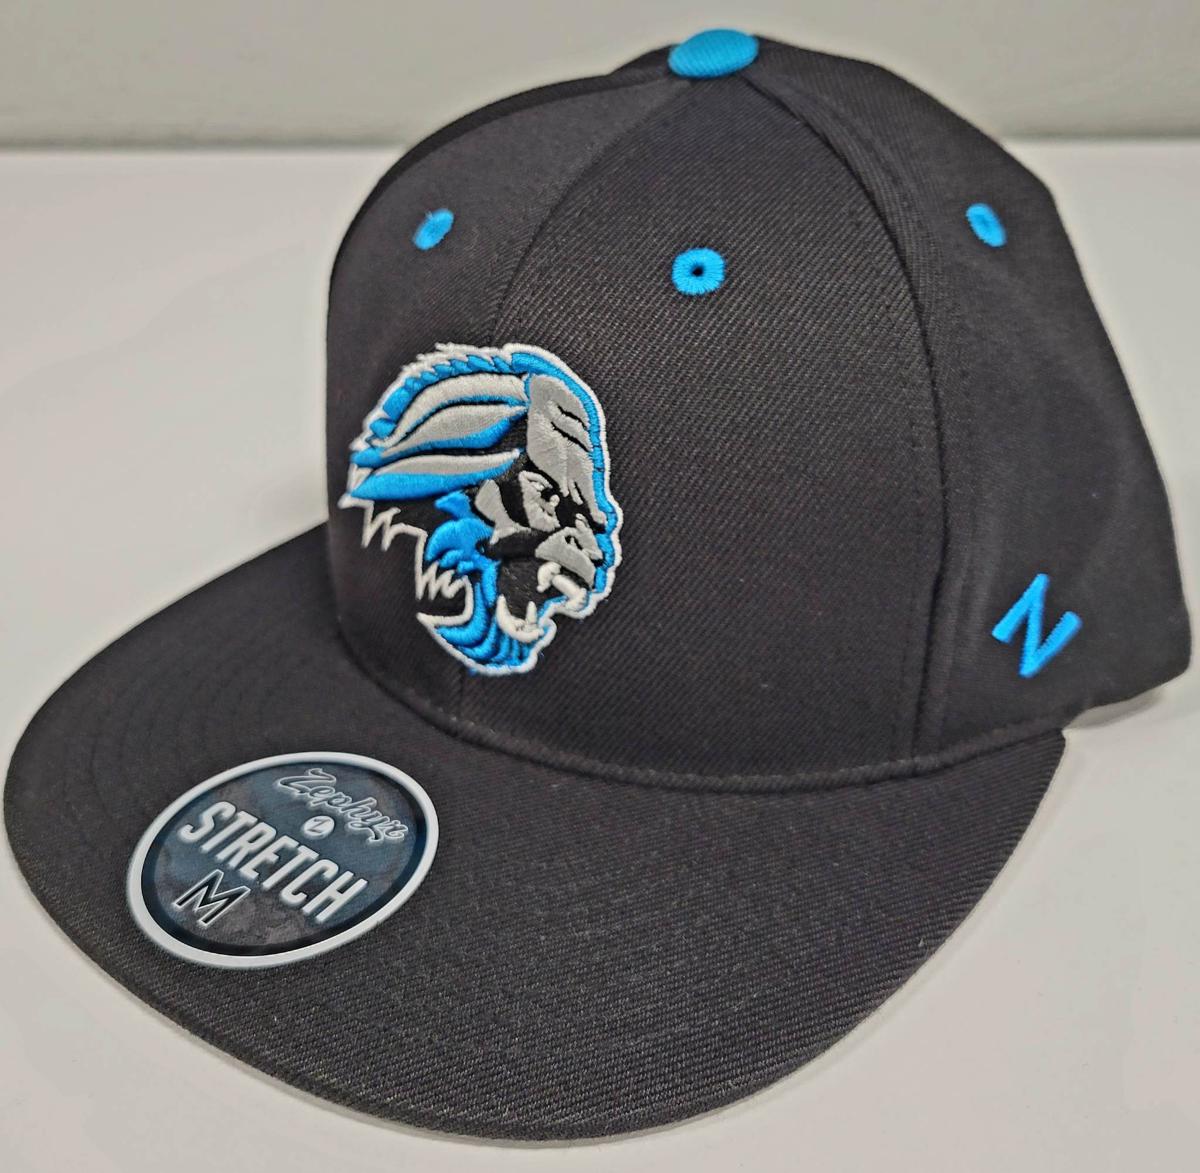 Sasquatch Zephyr Fitted Hat - Head Logo